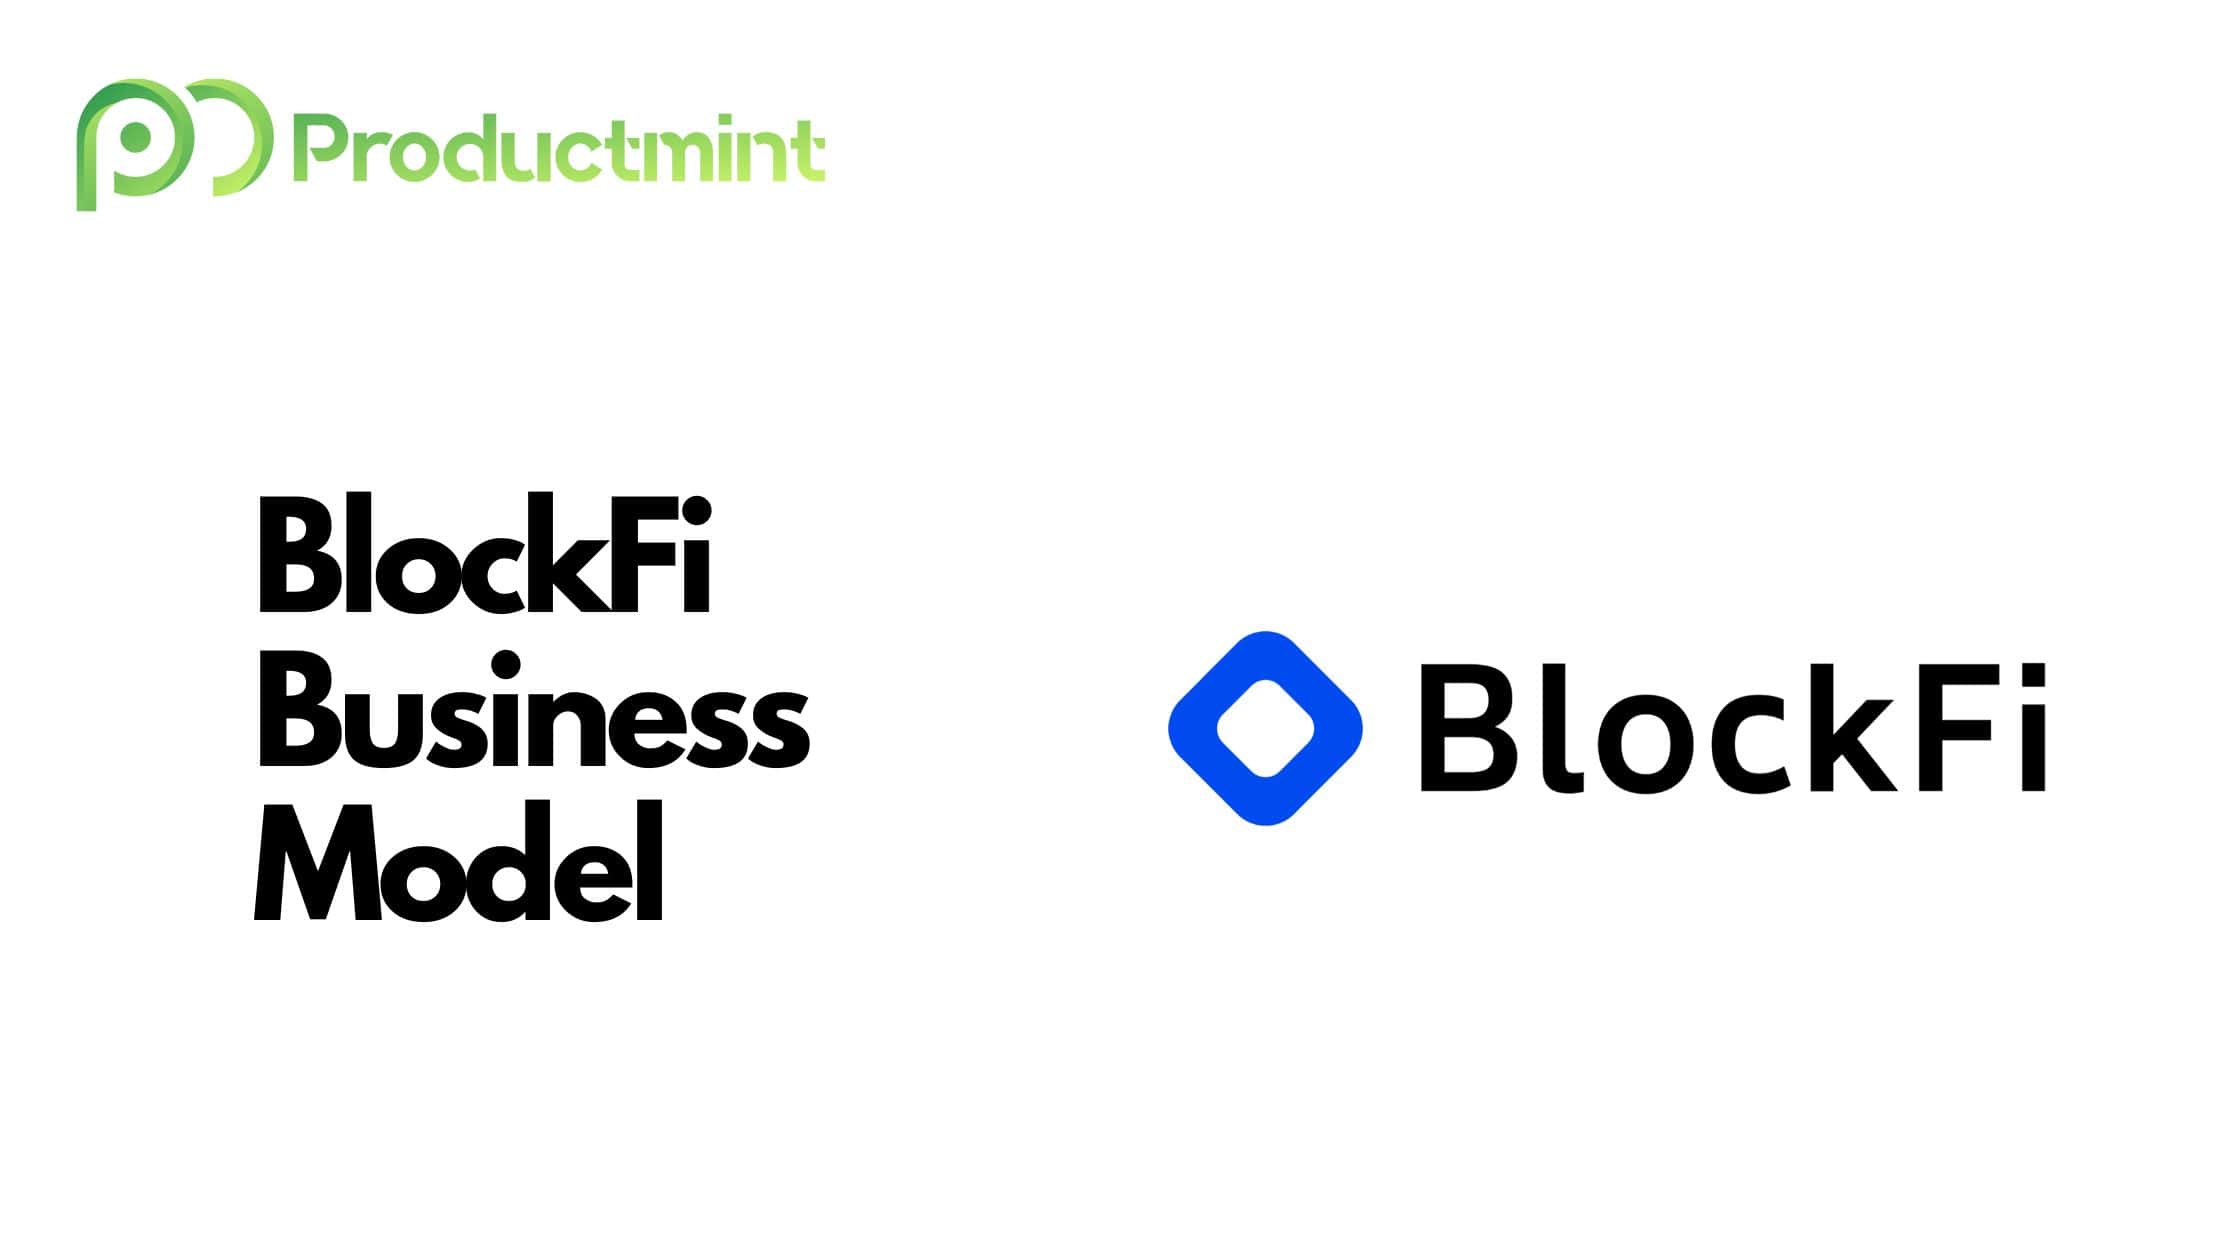 BlockFi Business Model